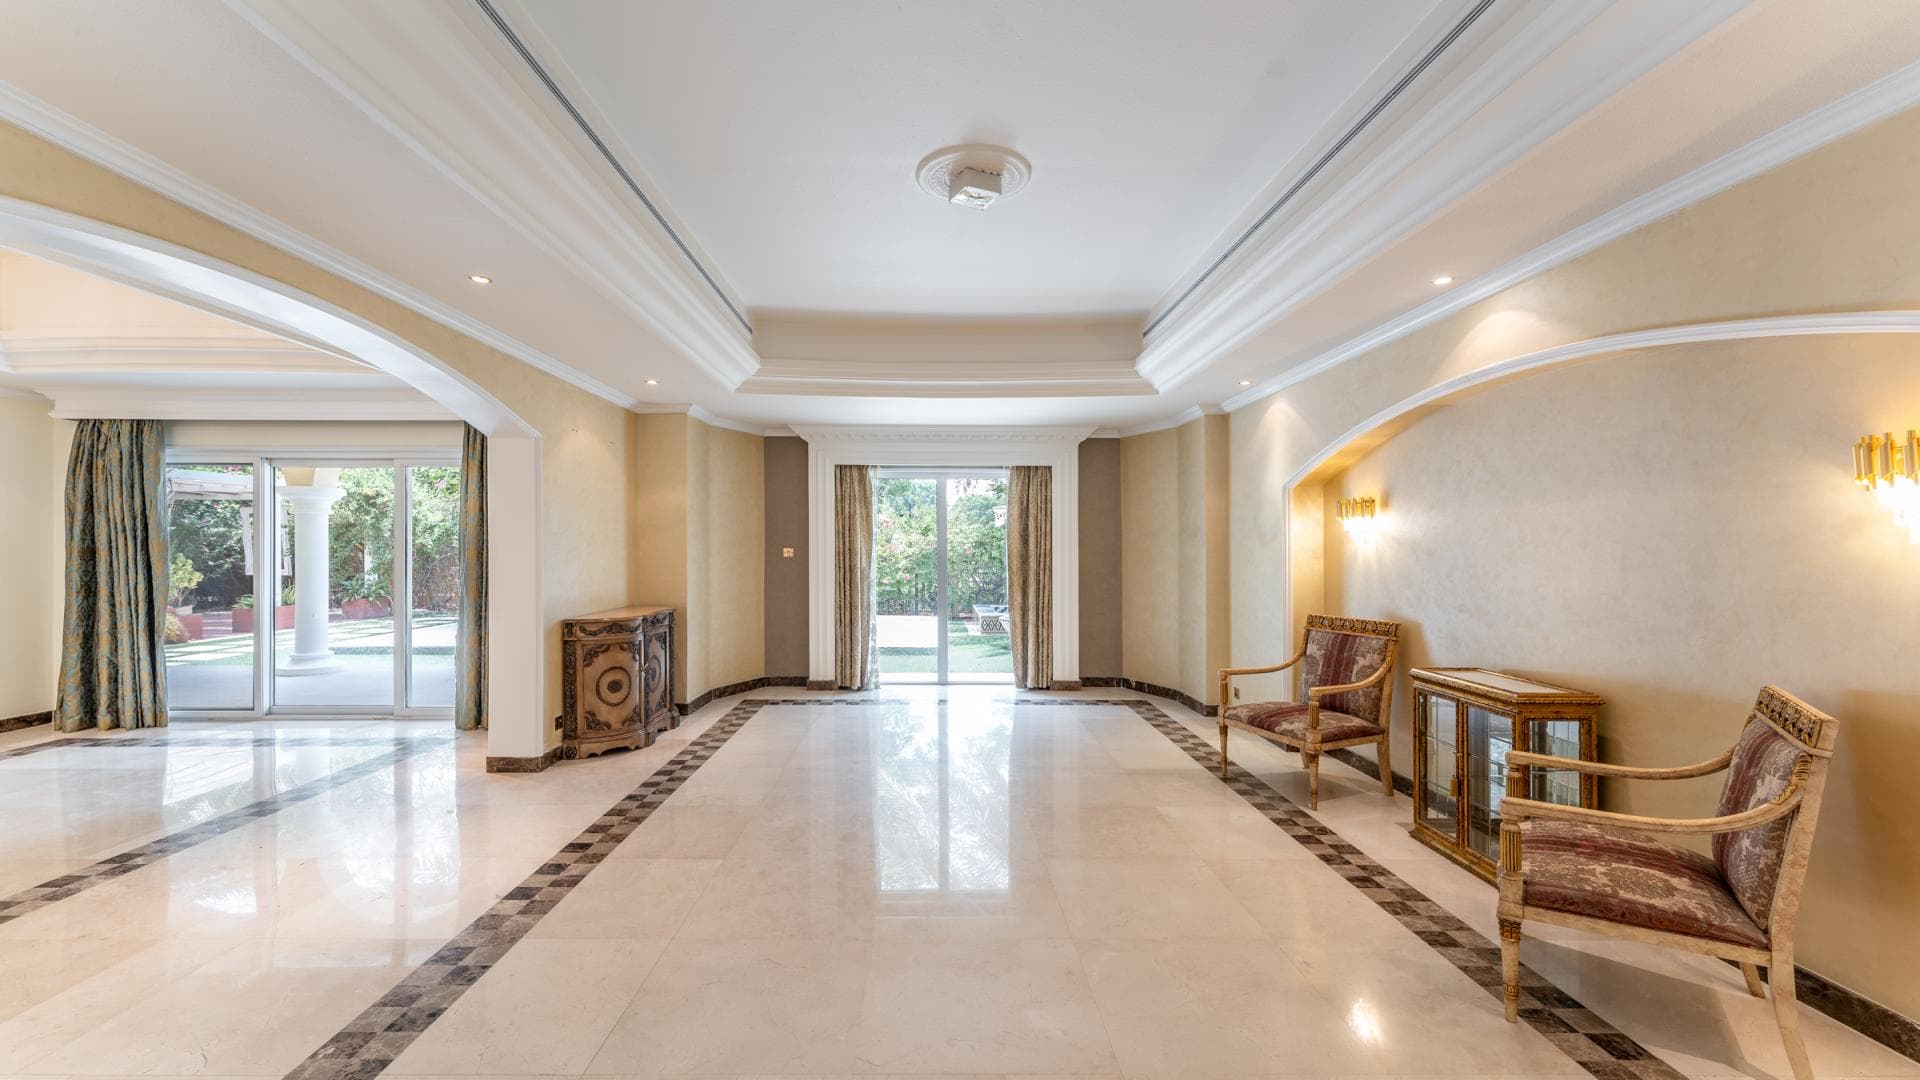 5 Bedroom Villa For Rent Al Thamam 36 Lp36037 18406381c2950400.jpg